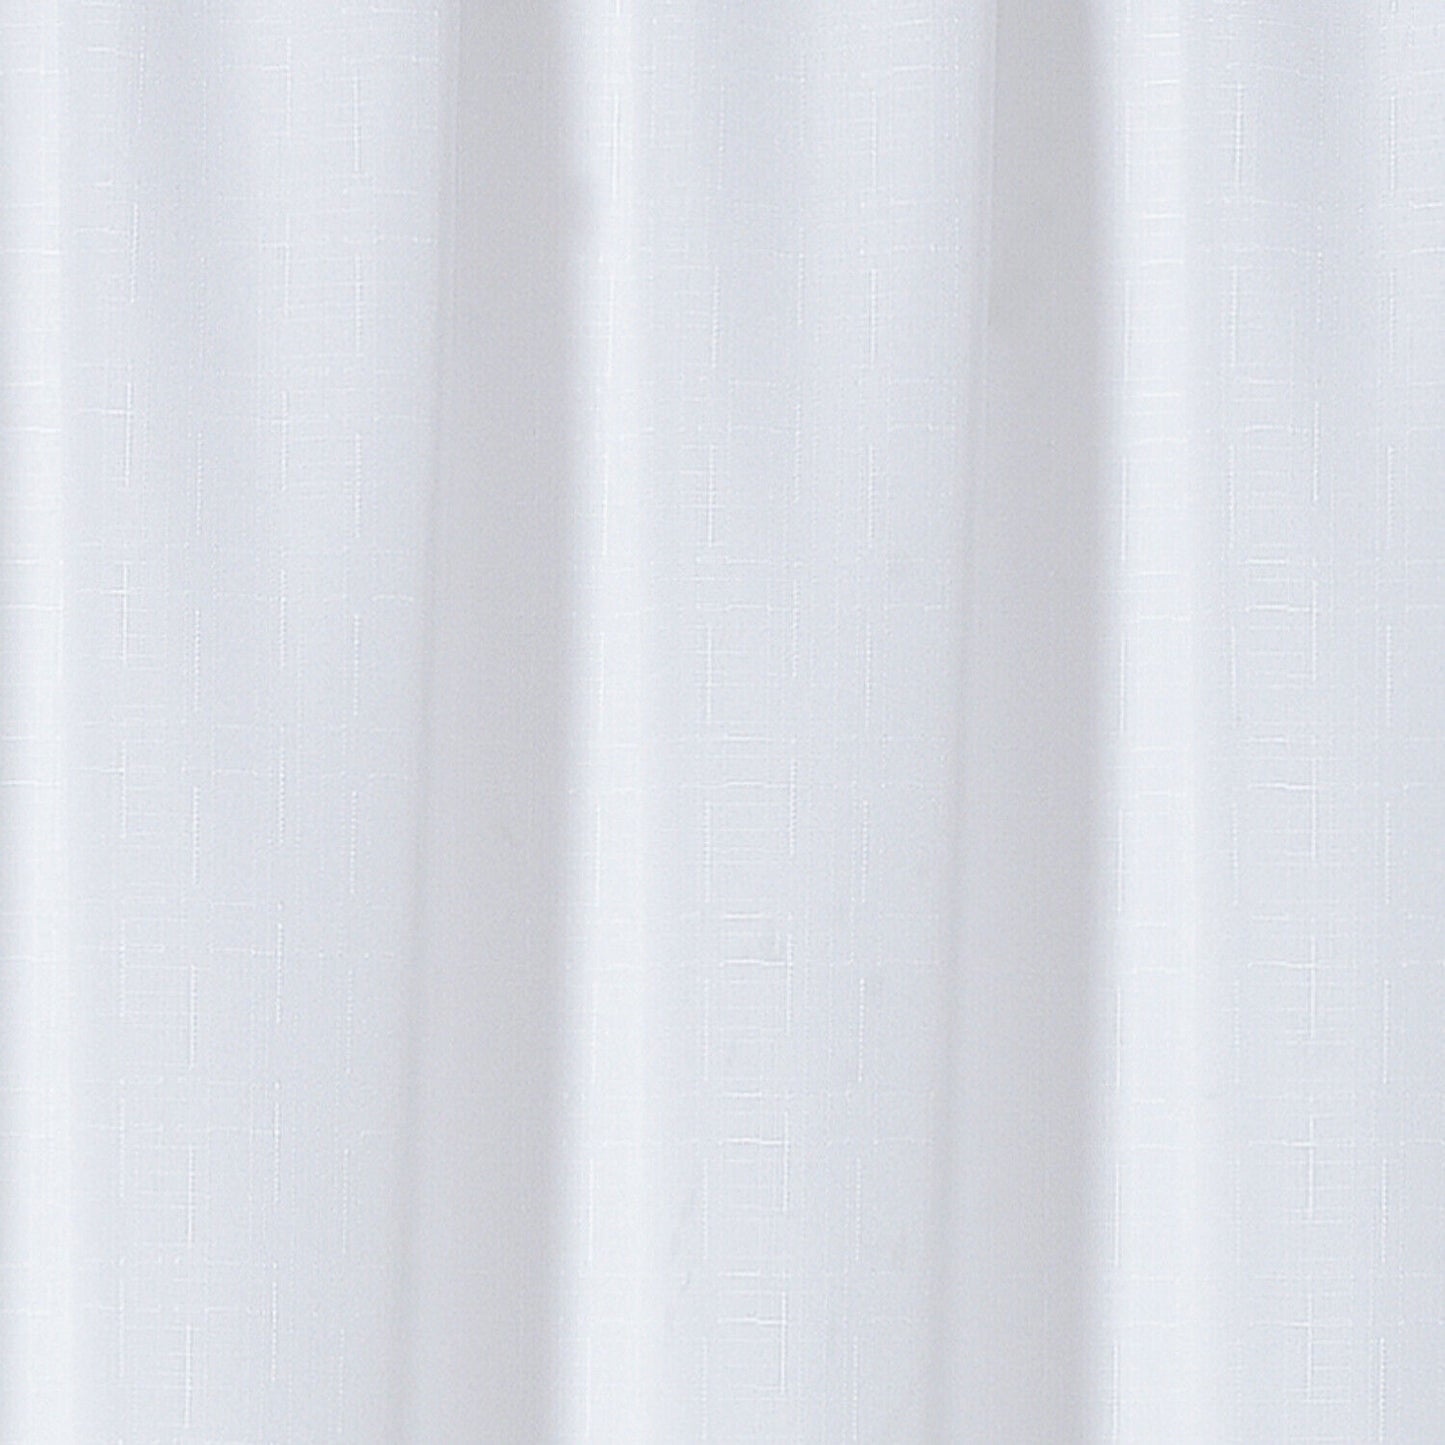 Linen Look Voile 59" x 72" White Window Curtain Drapes Textured Plain Slot Top